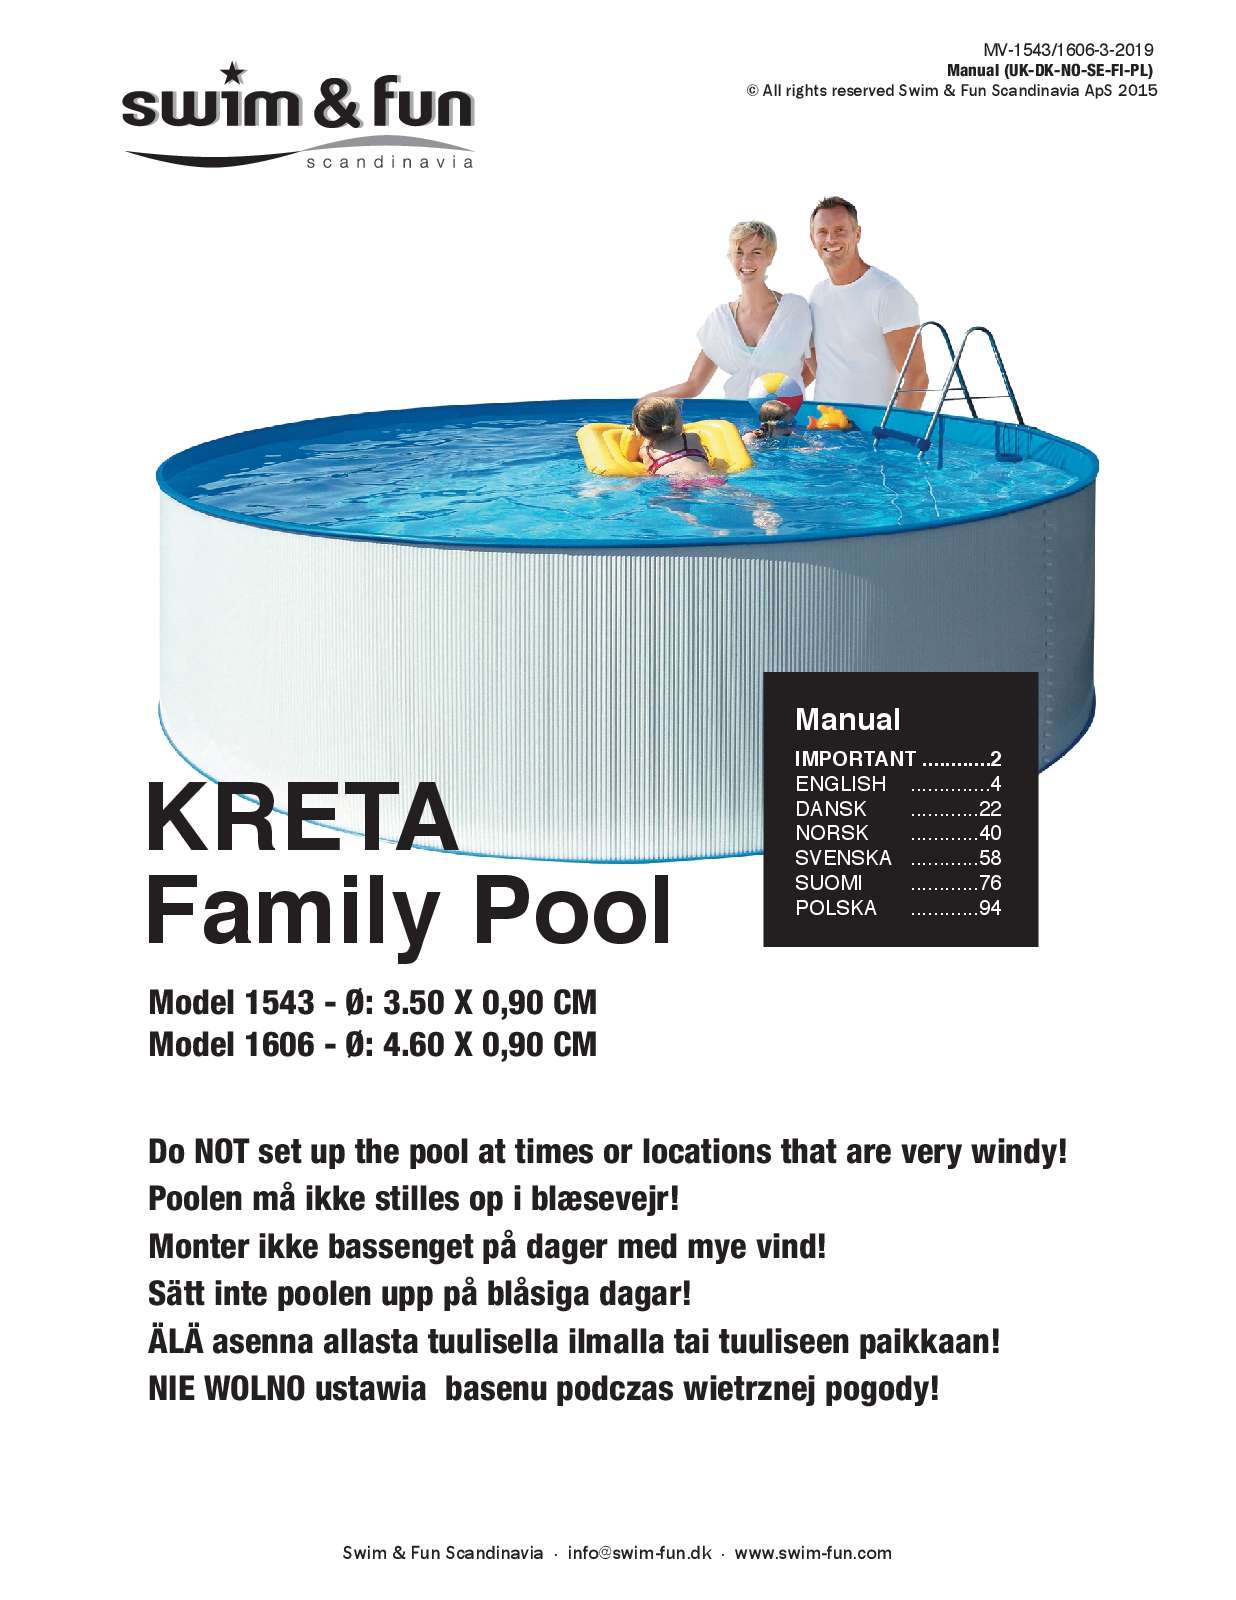 KRETA Family Pool Manual